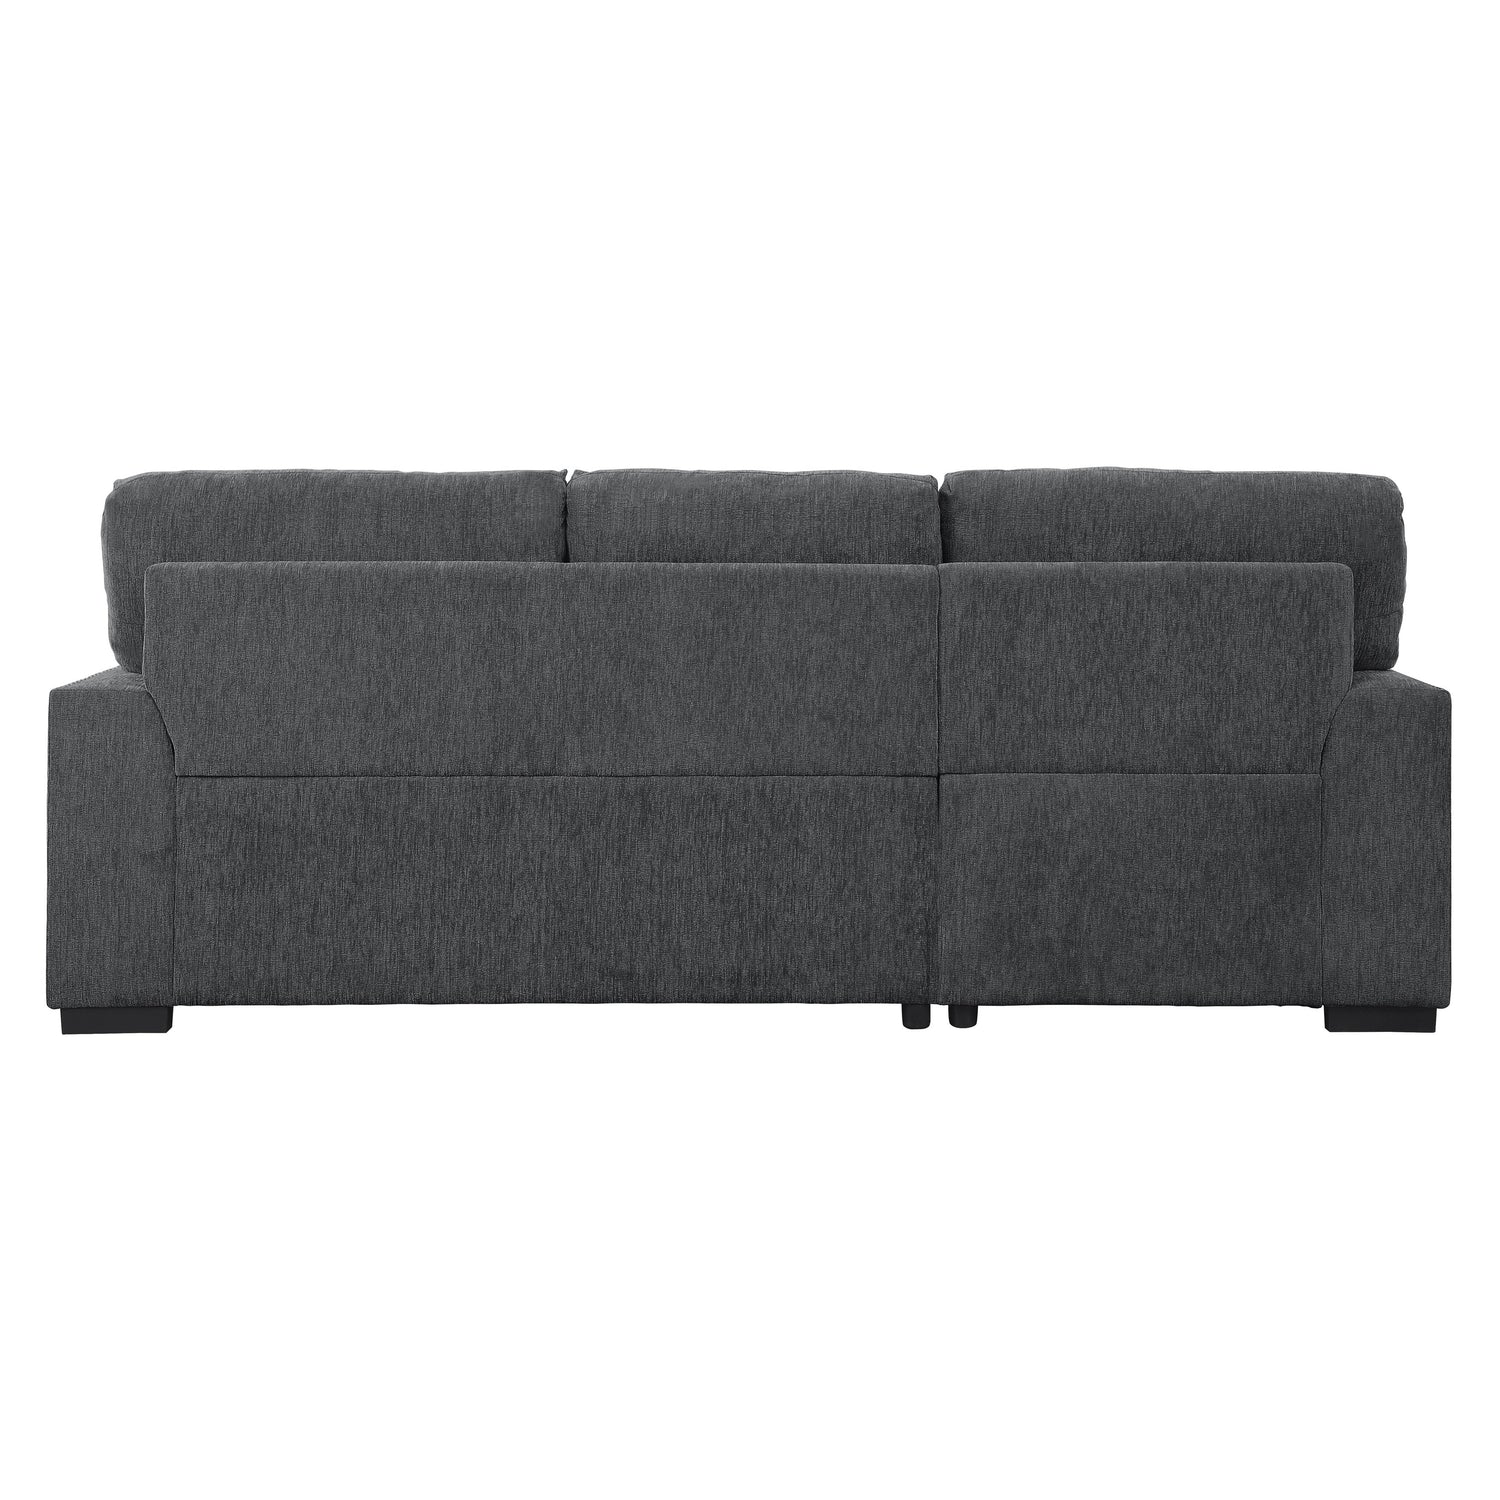 Morelia Charcoal LAF Storage Sleeper Sofa Chaise - 9468CC*2LC2R - Bien Home Furniture &amp; Electronics